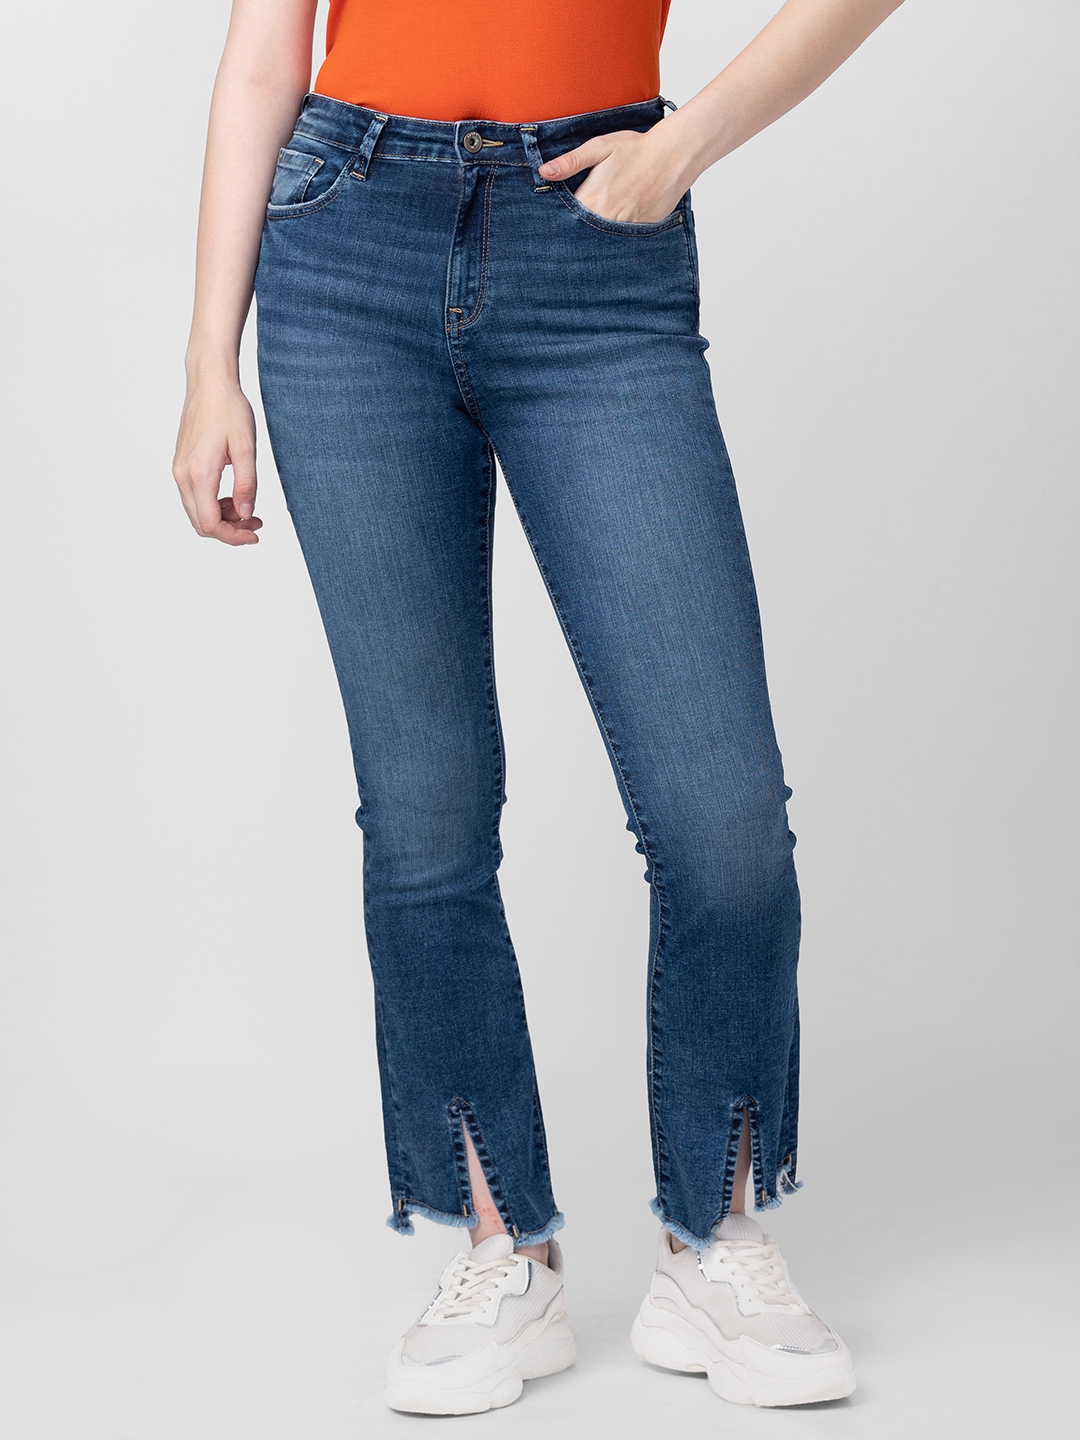 spykar | Women's Blue Cotton Solid Jeans 0